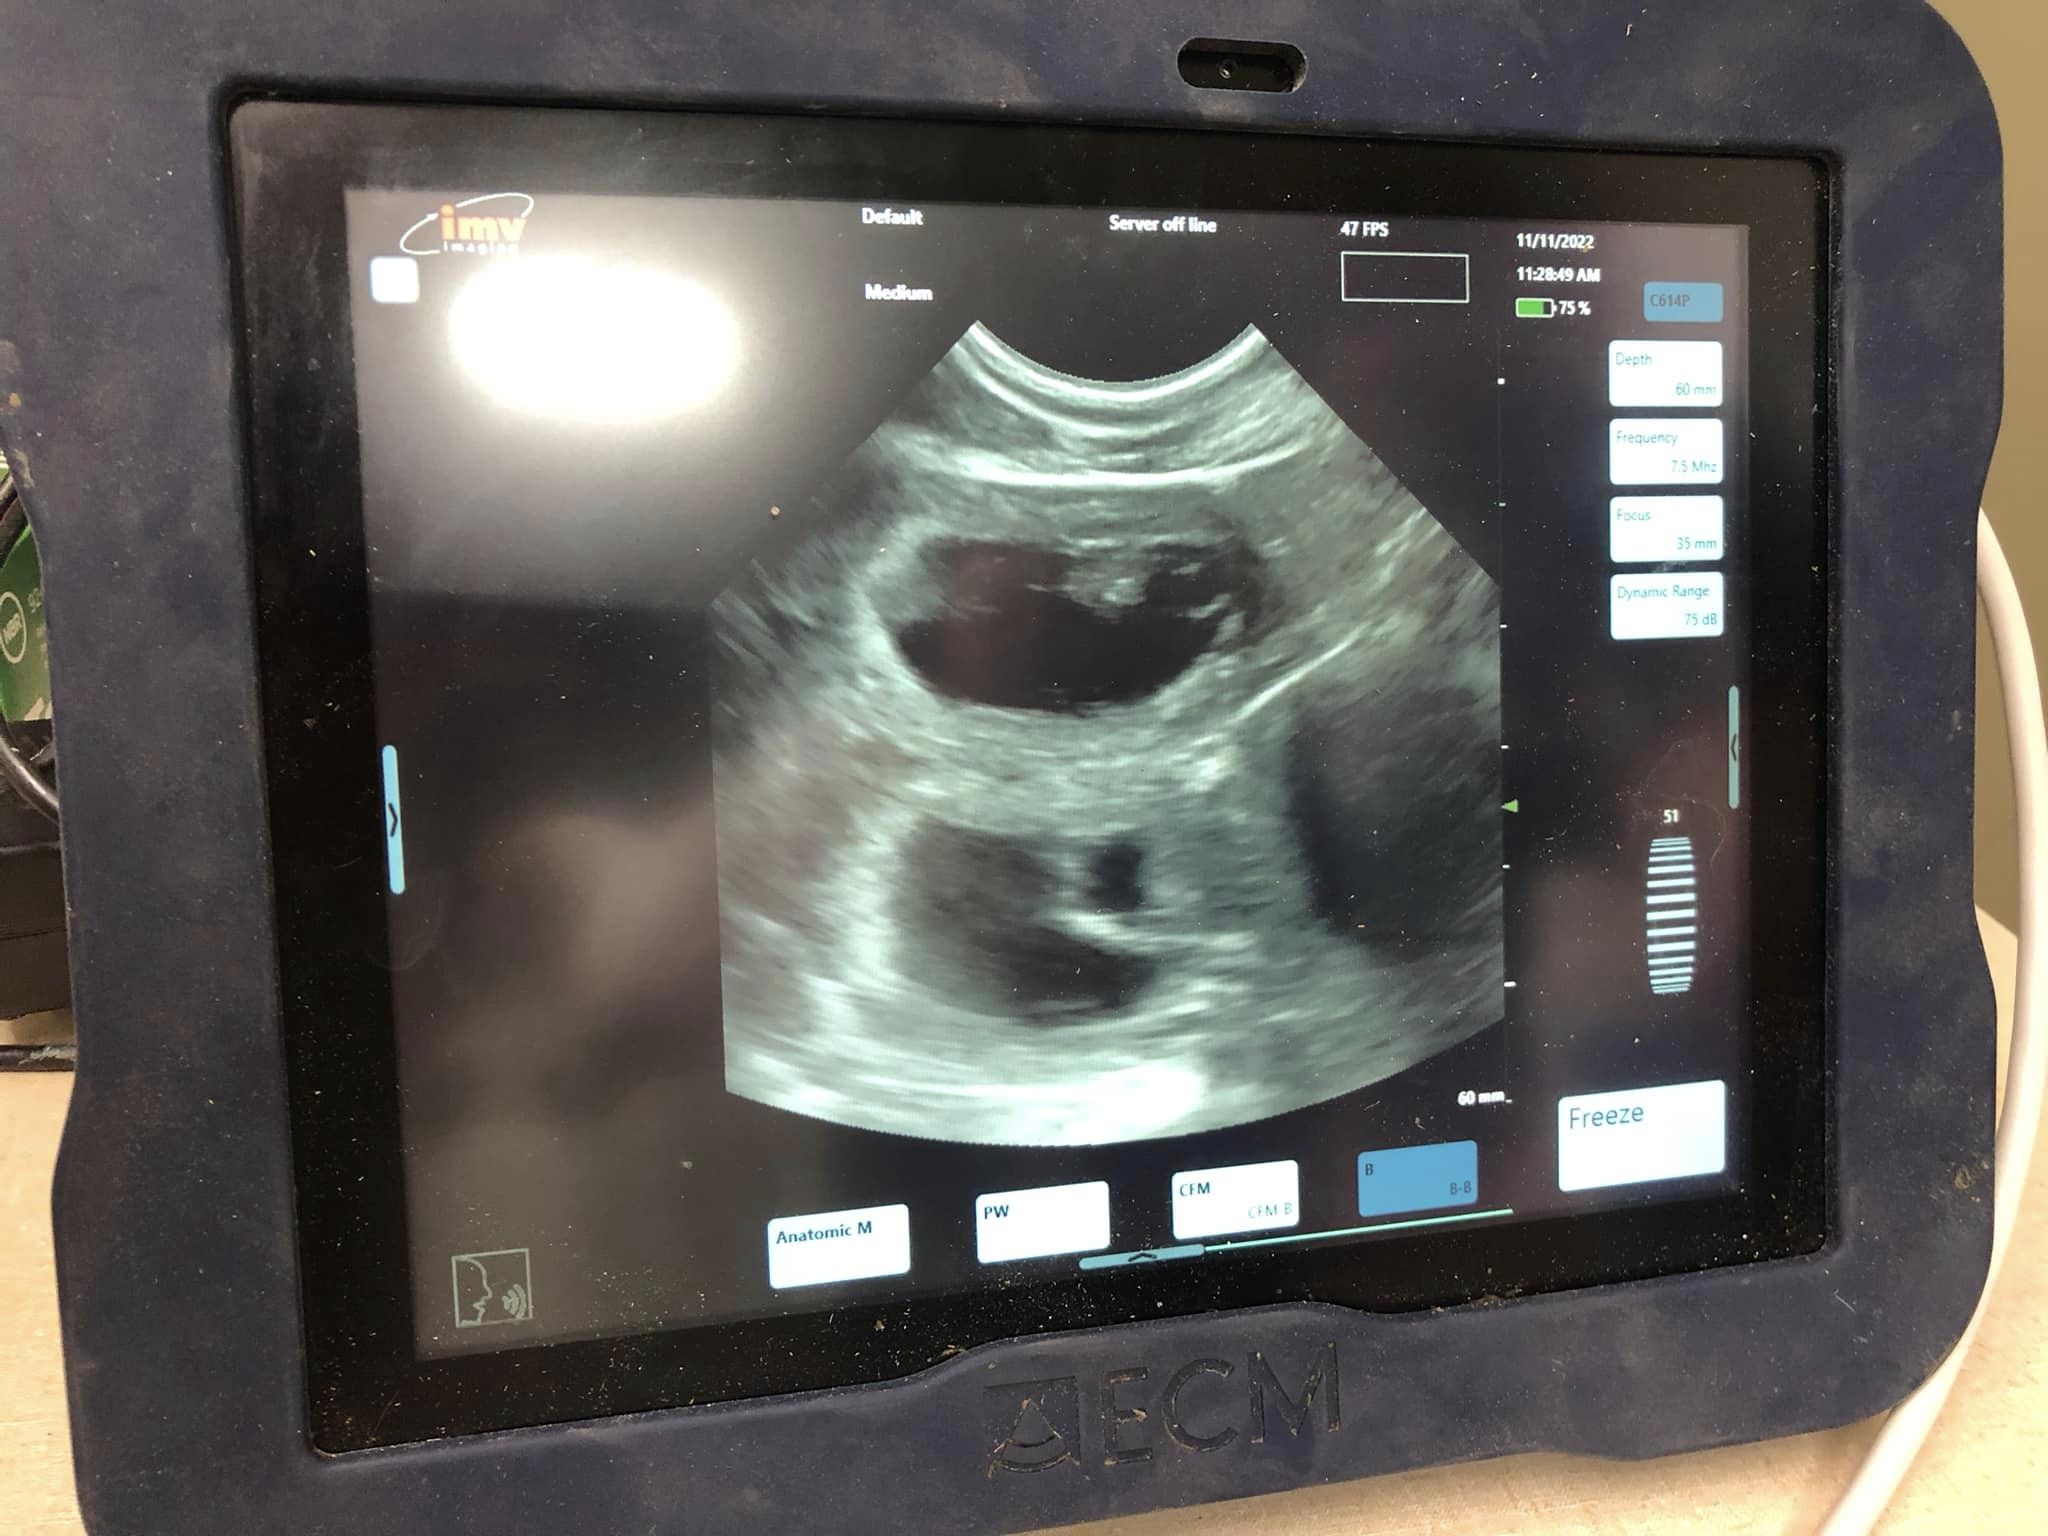 Stormy/Gunner Ultrasound Confirmation